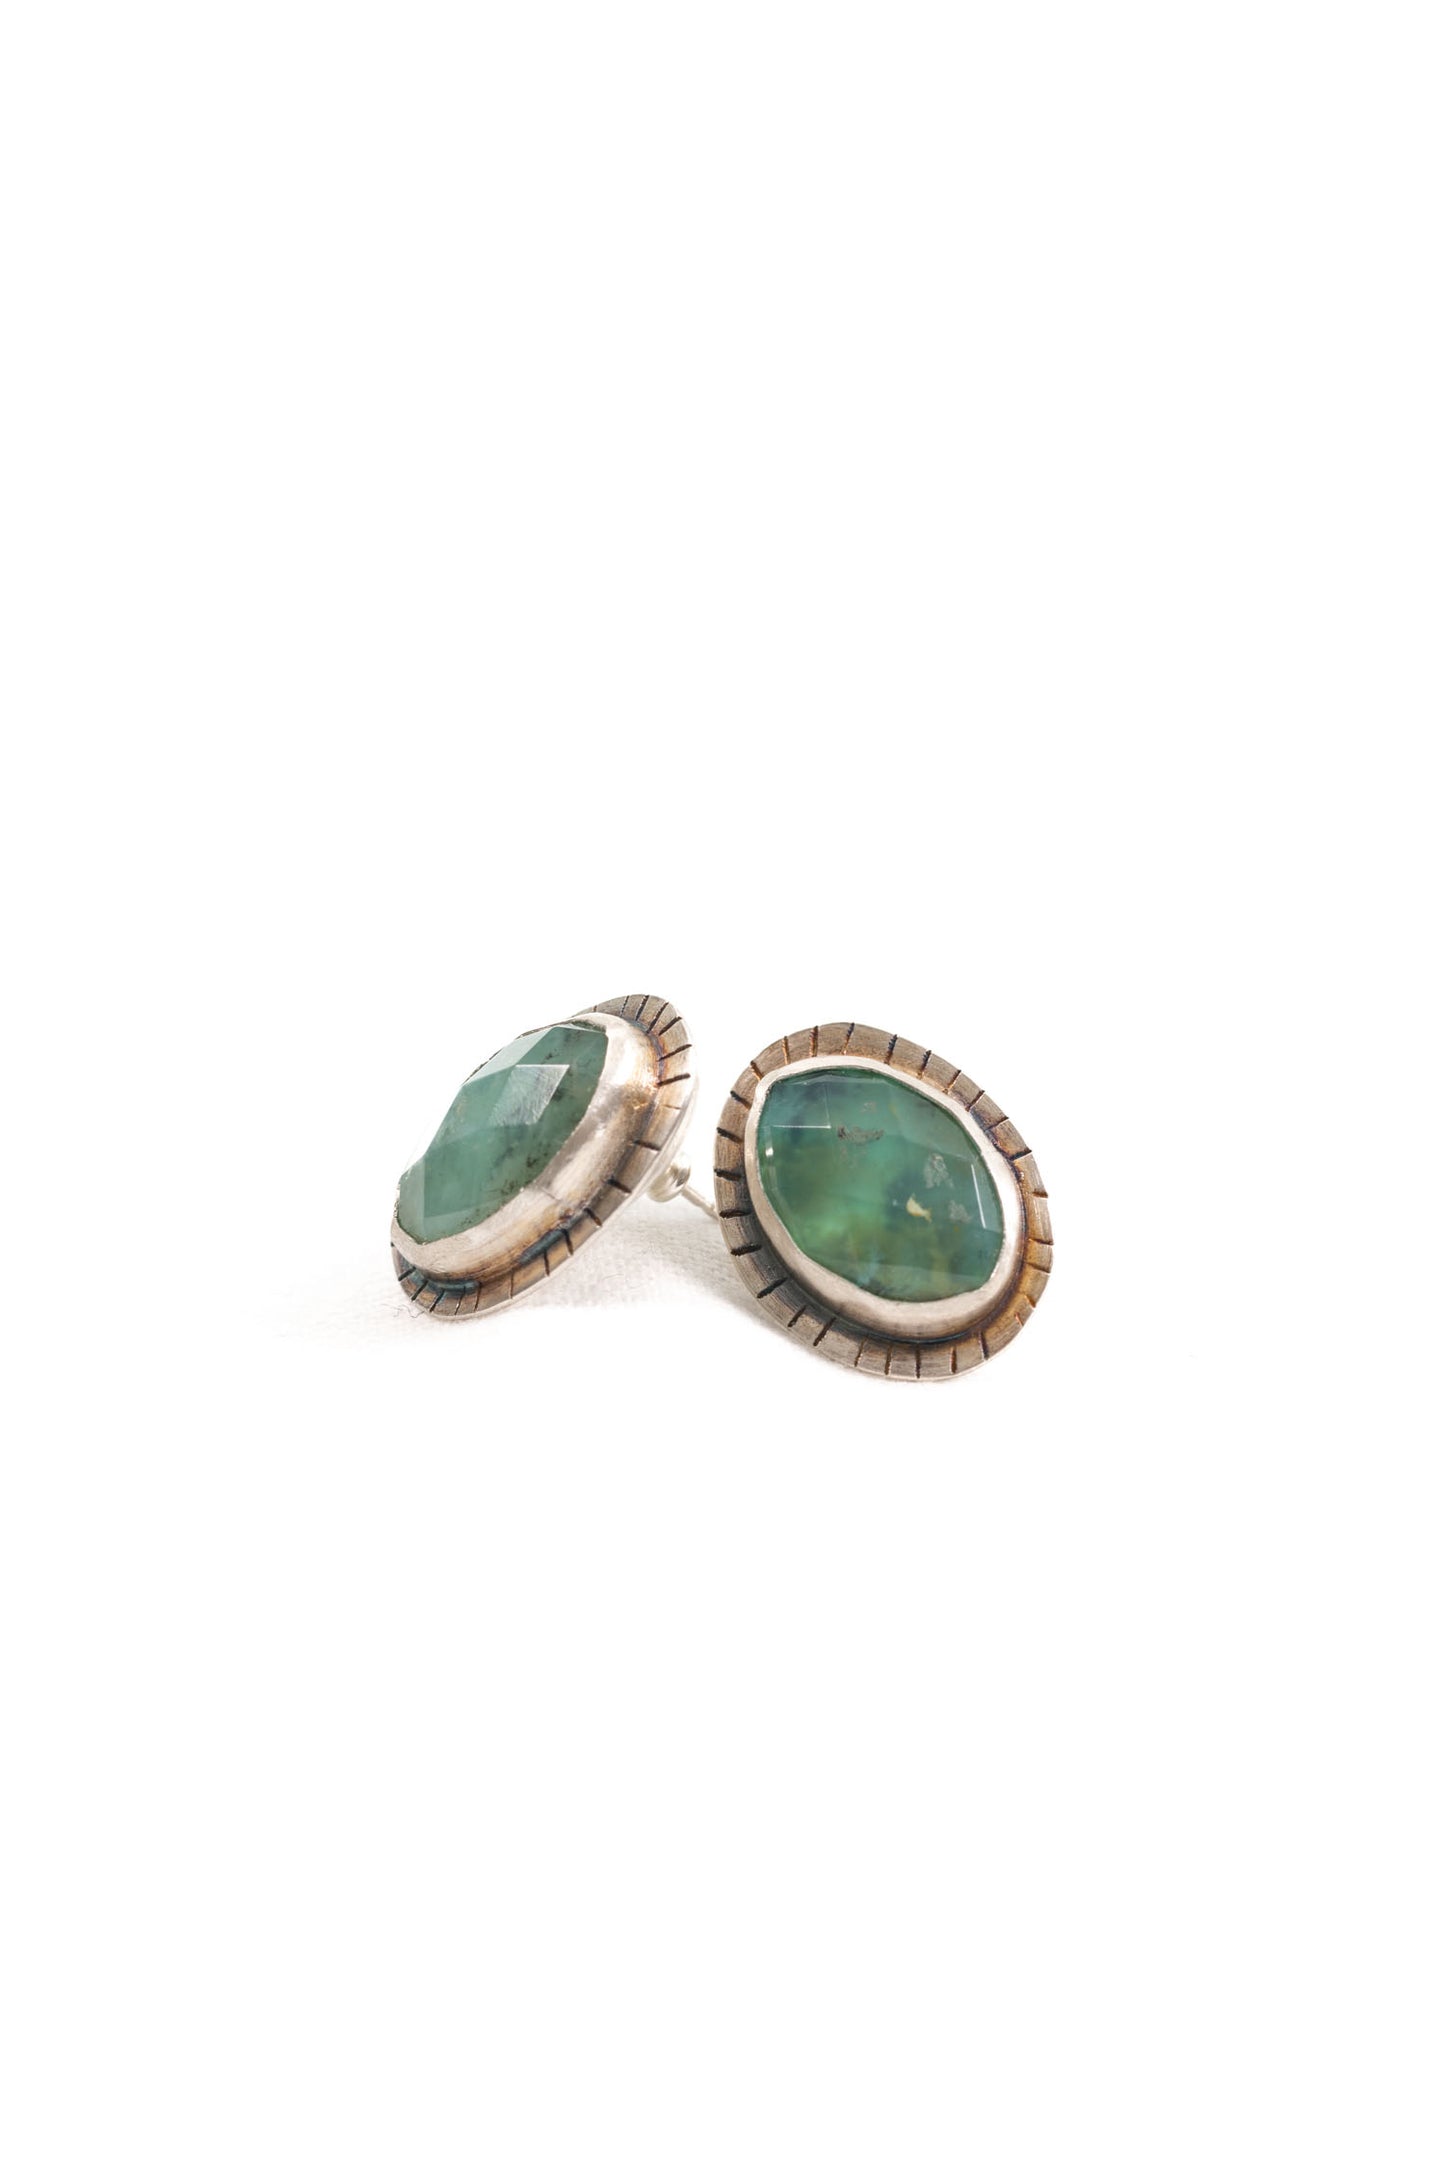 faceted peruvian opal earrings in sterling silver